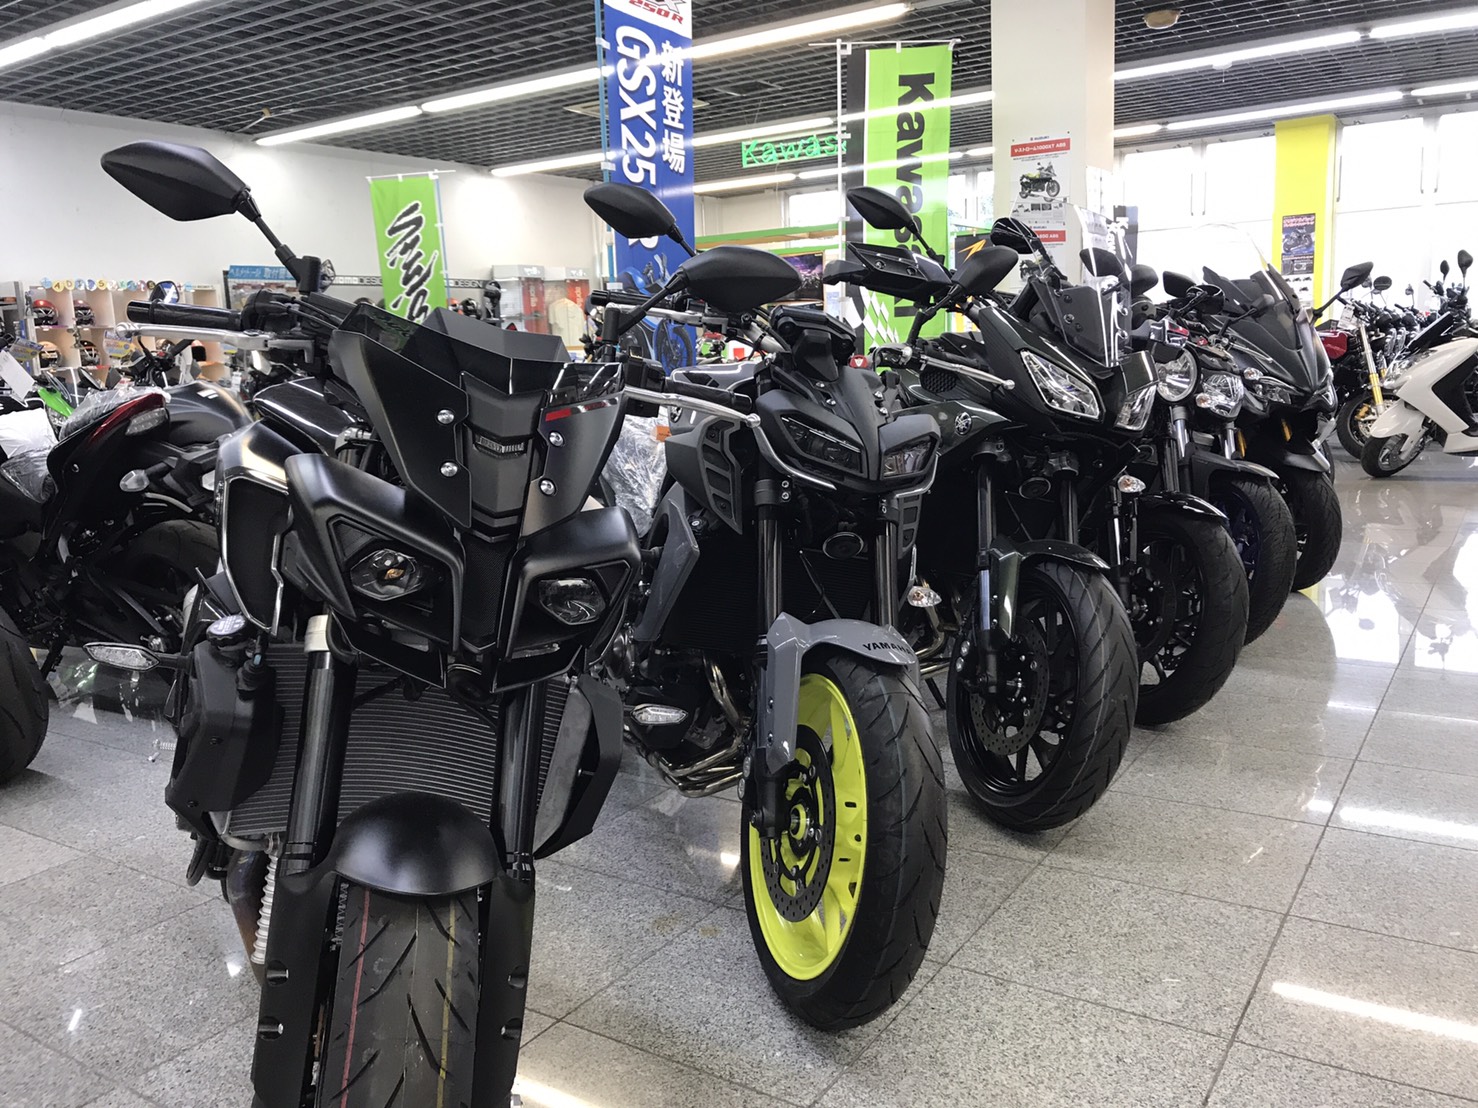 Yamaha大型バイク取り揃えております 最新情報 U Media ユーメディア 中古バイク 新車バイク 探しの決定版 神奈川 東京でバイク探すならユーメディア